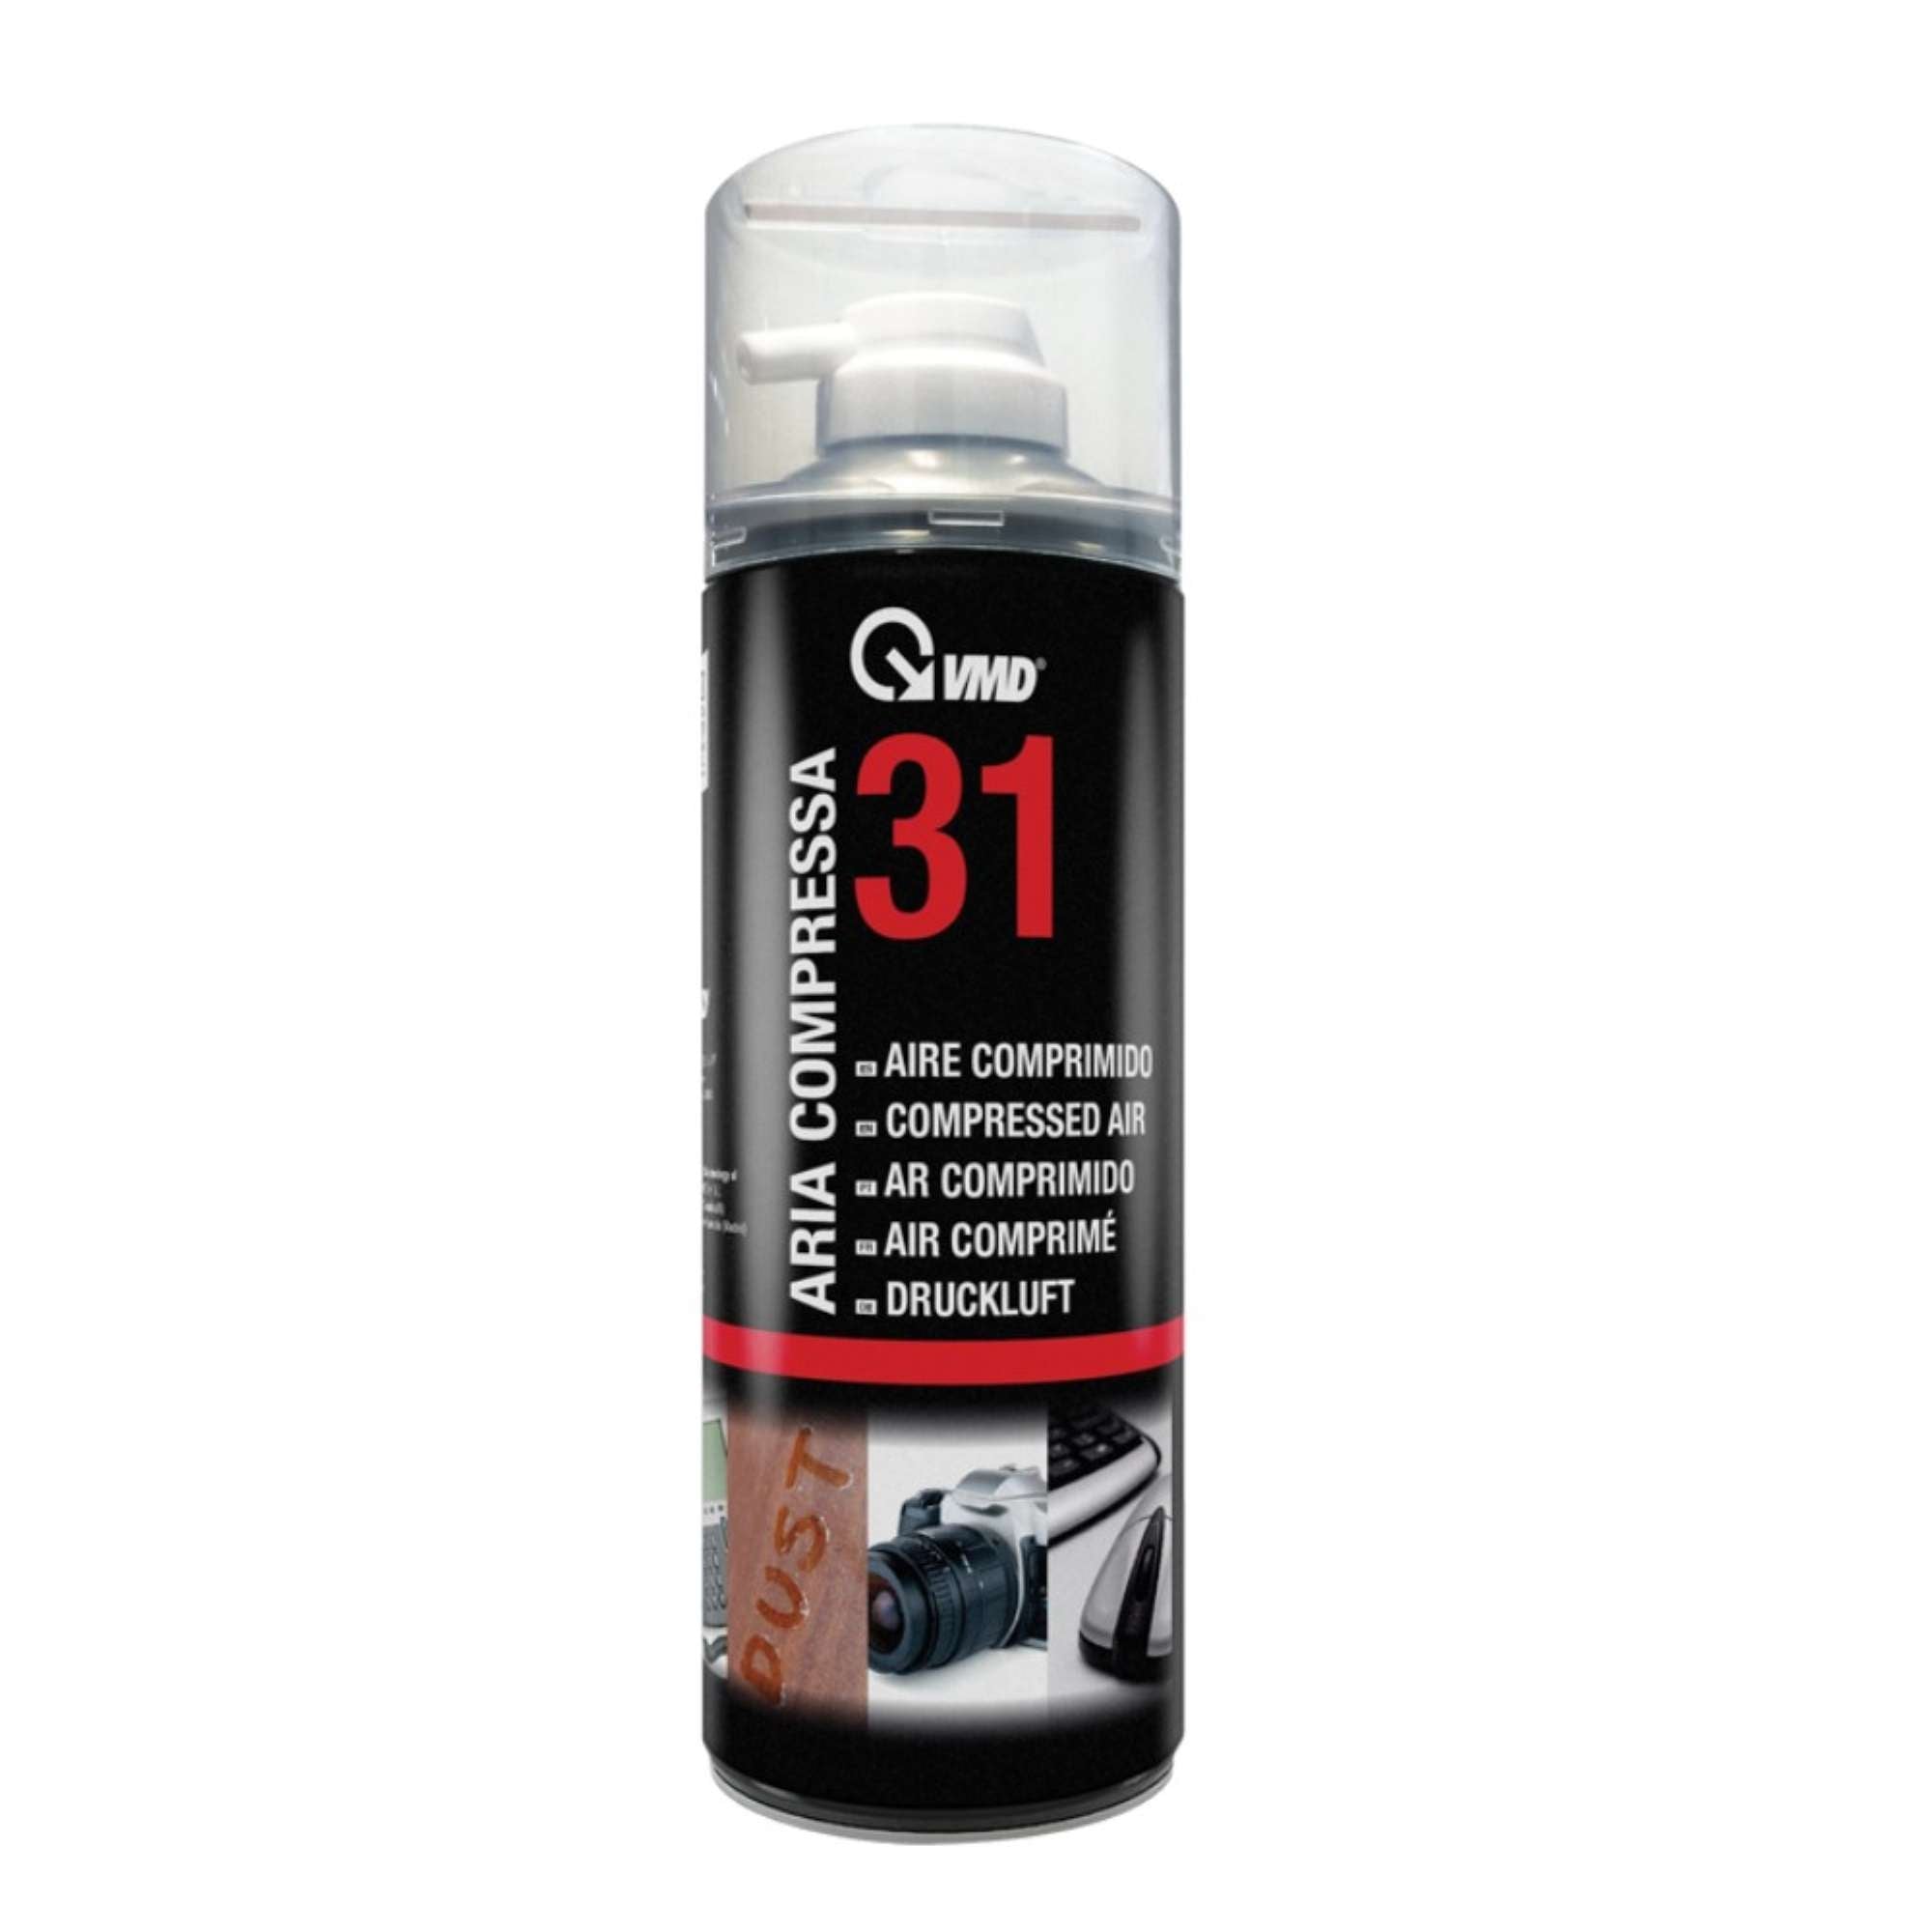 Aria compressa Spray 400 ml - VMD31